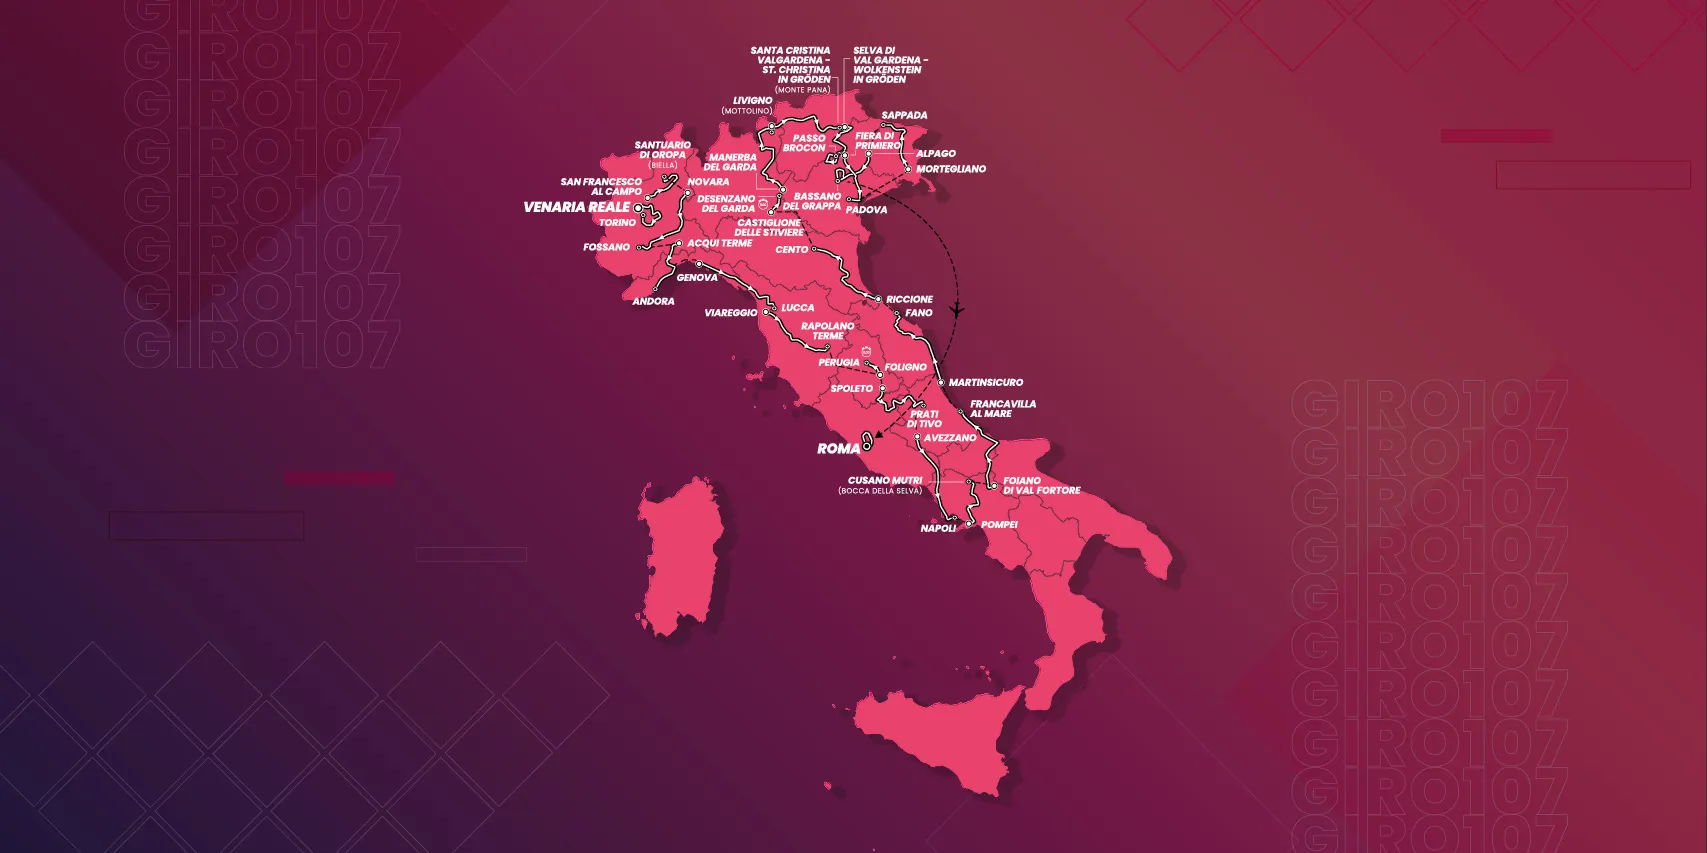 Karte Giro d'Italia 2024 Italien gesamt mit schematischer Route&amp;amp;amp;amp;amp;amp;amp;lt;br&amp;amp;amp;amp;amp;amp;amp;gt;